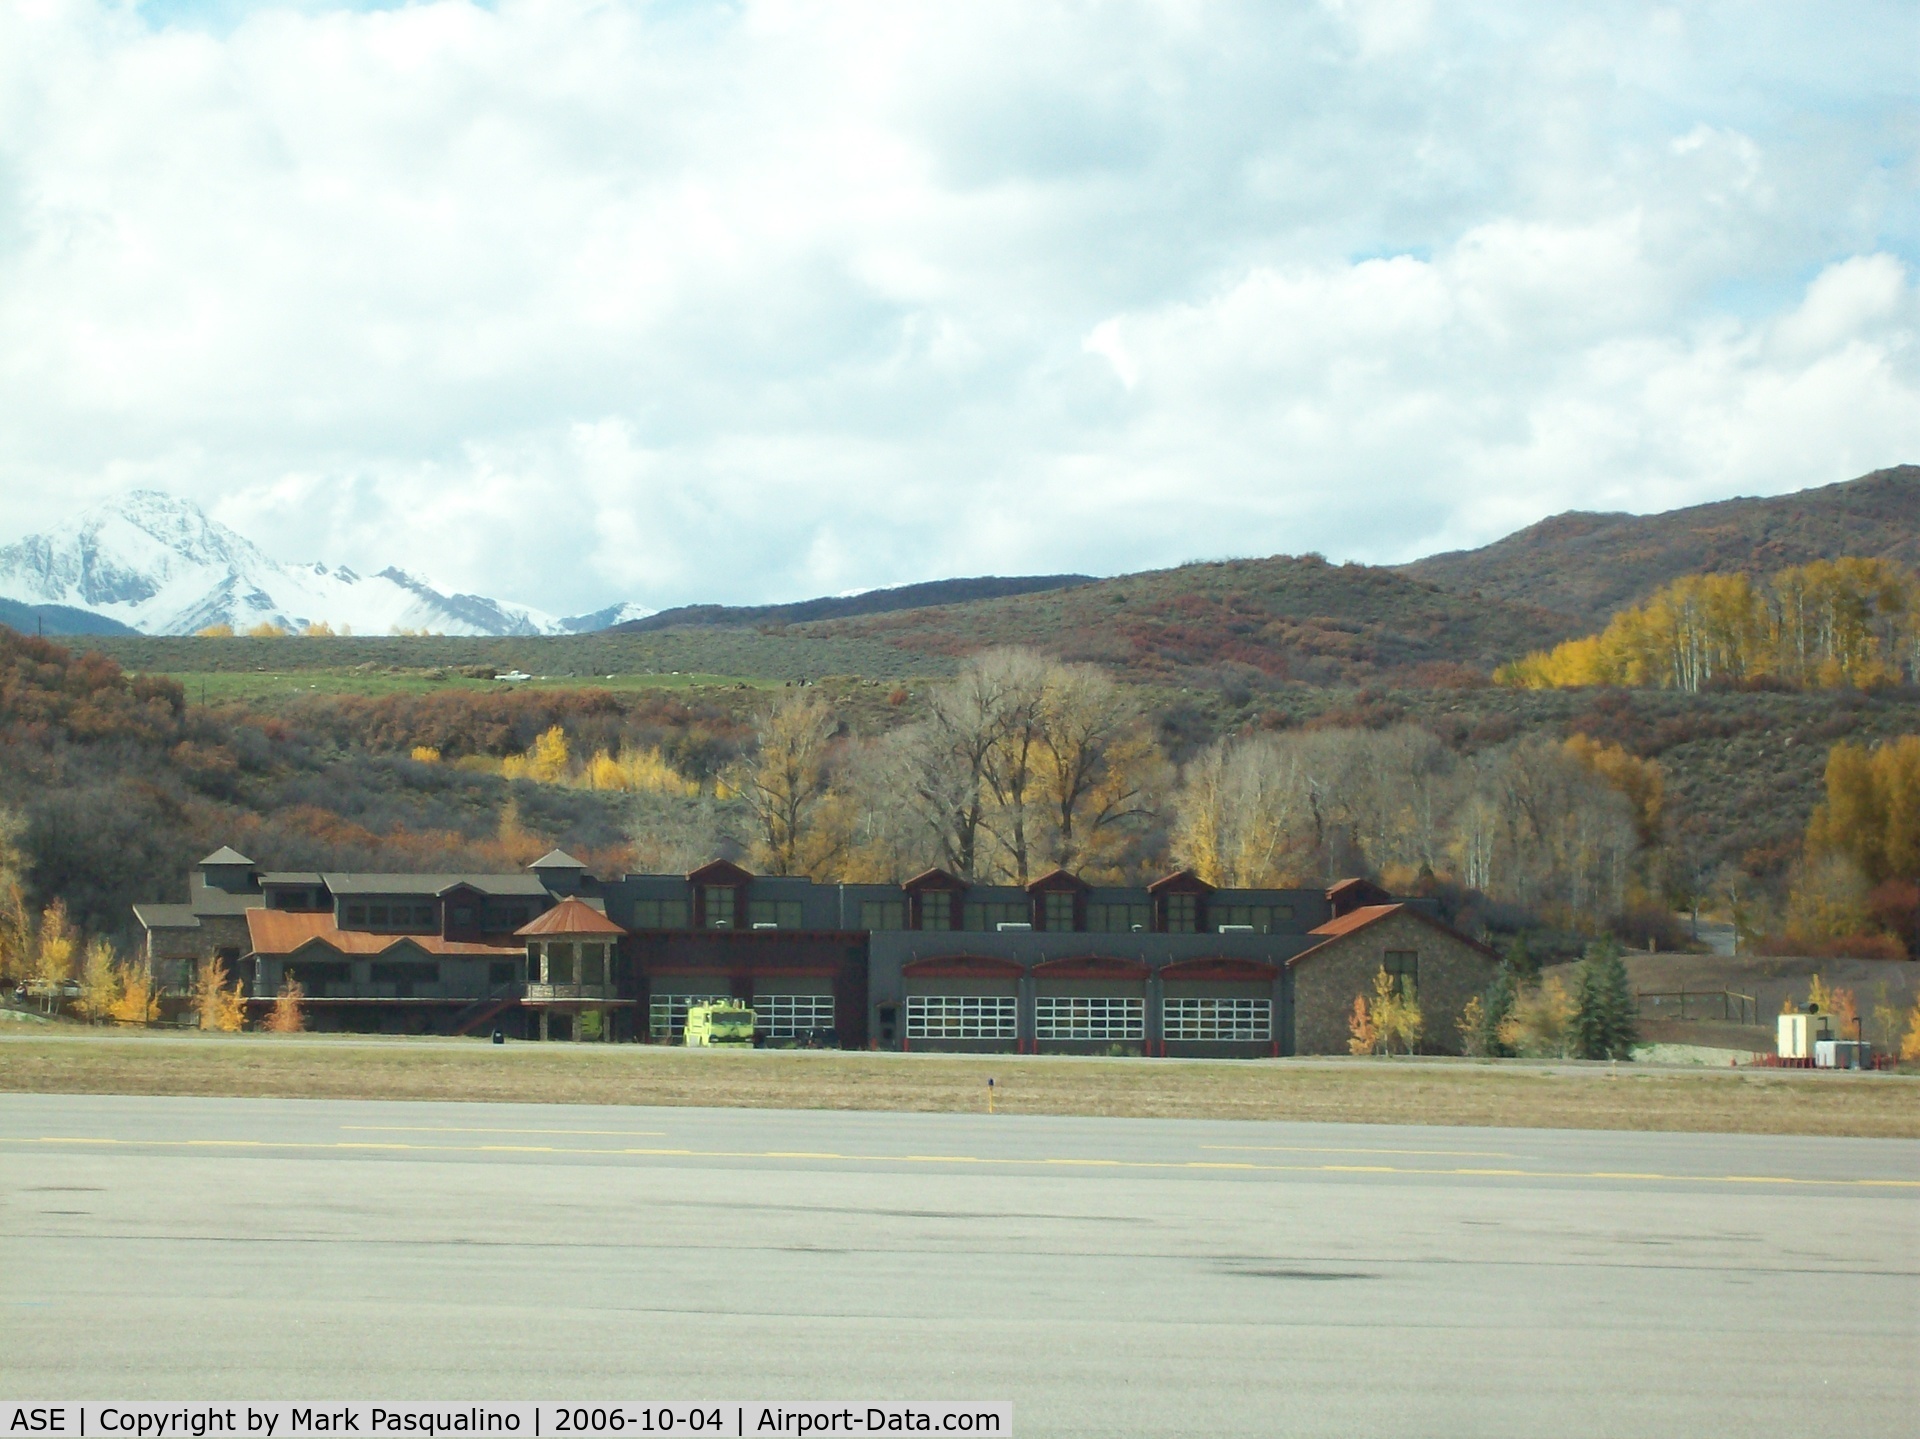 Aspen-pitkin Co/sardy Field Airport (ASE) - Aspen airport firestation